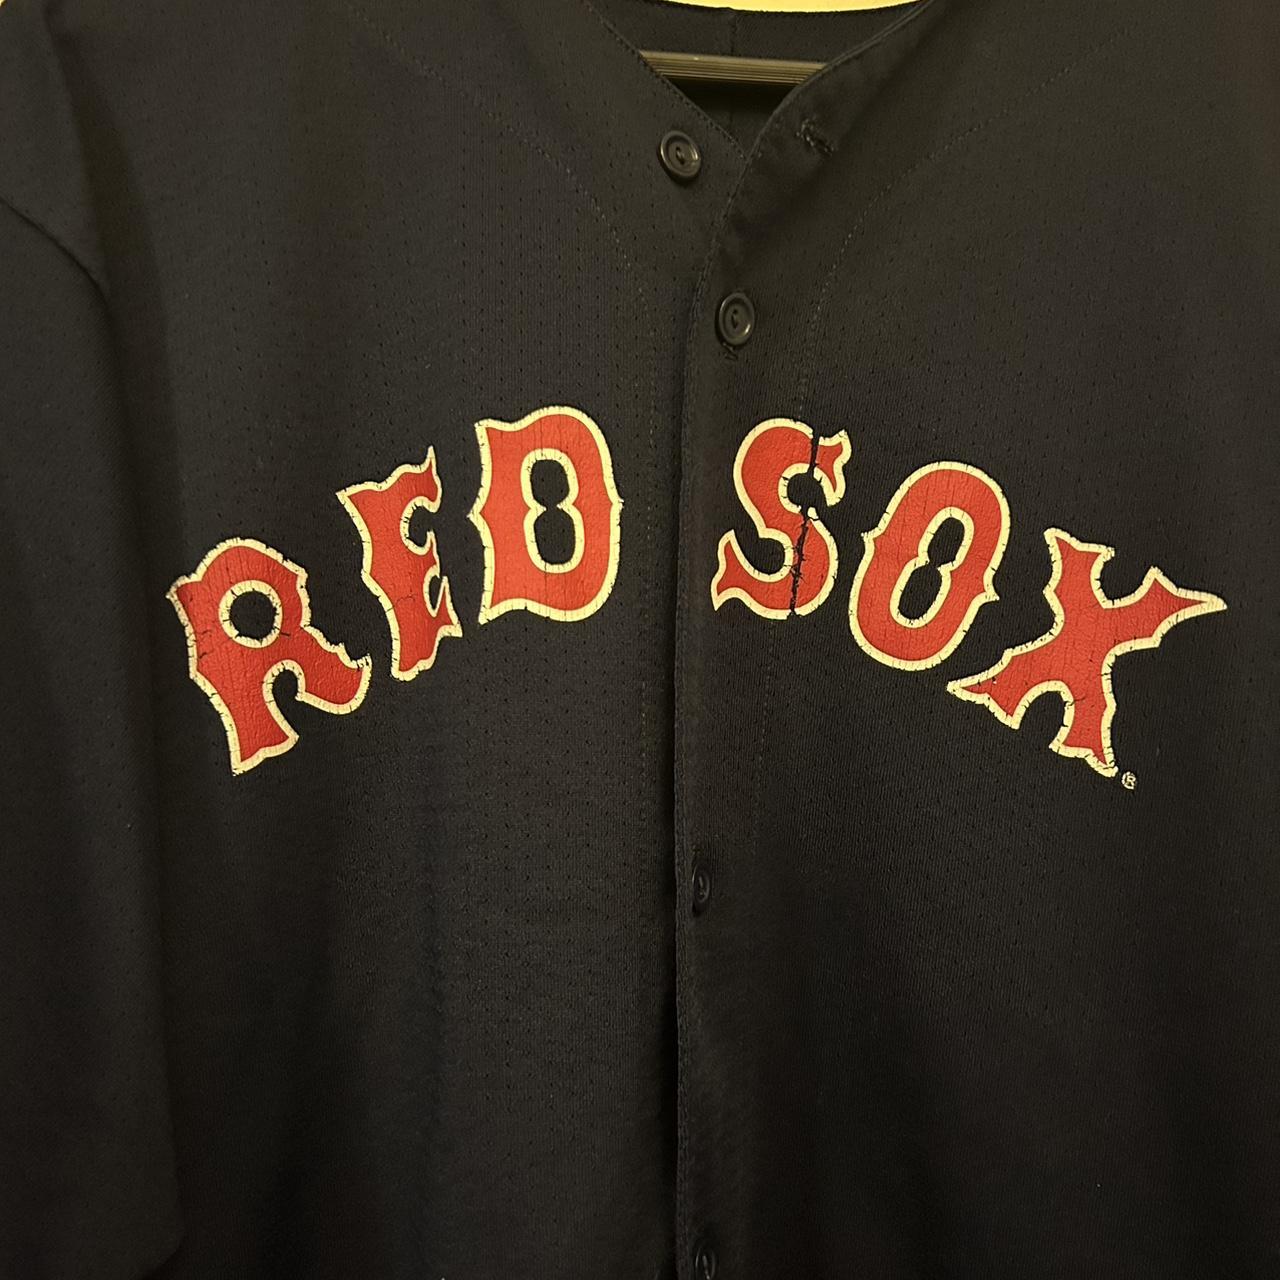 Boston Red Sox Shirt Manny Ramirez Due to - Depop